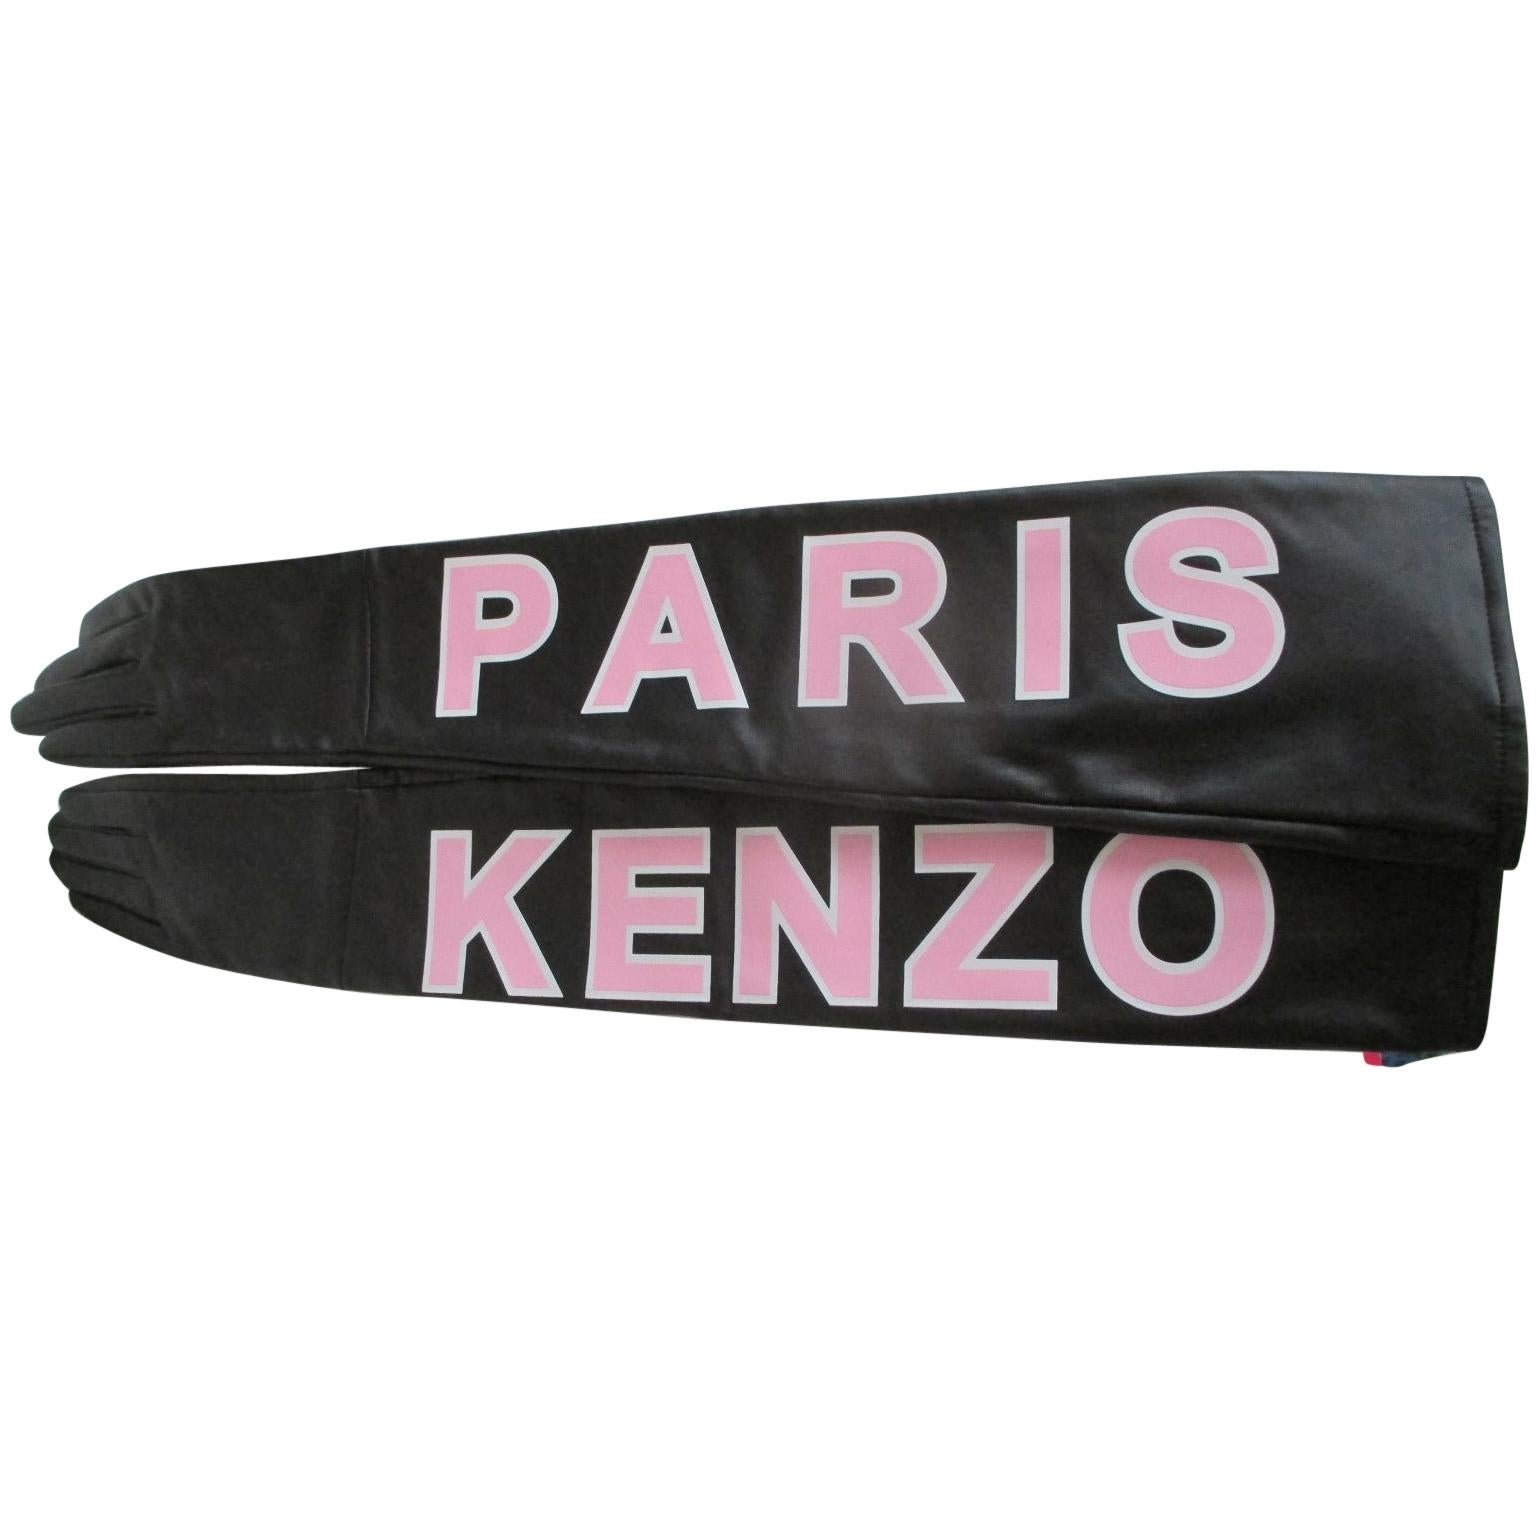 KENZO PARIS Black/Pink Leather Long Gloves size M